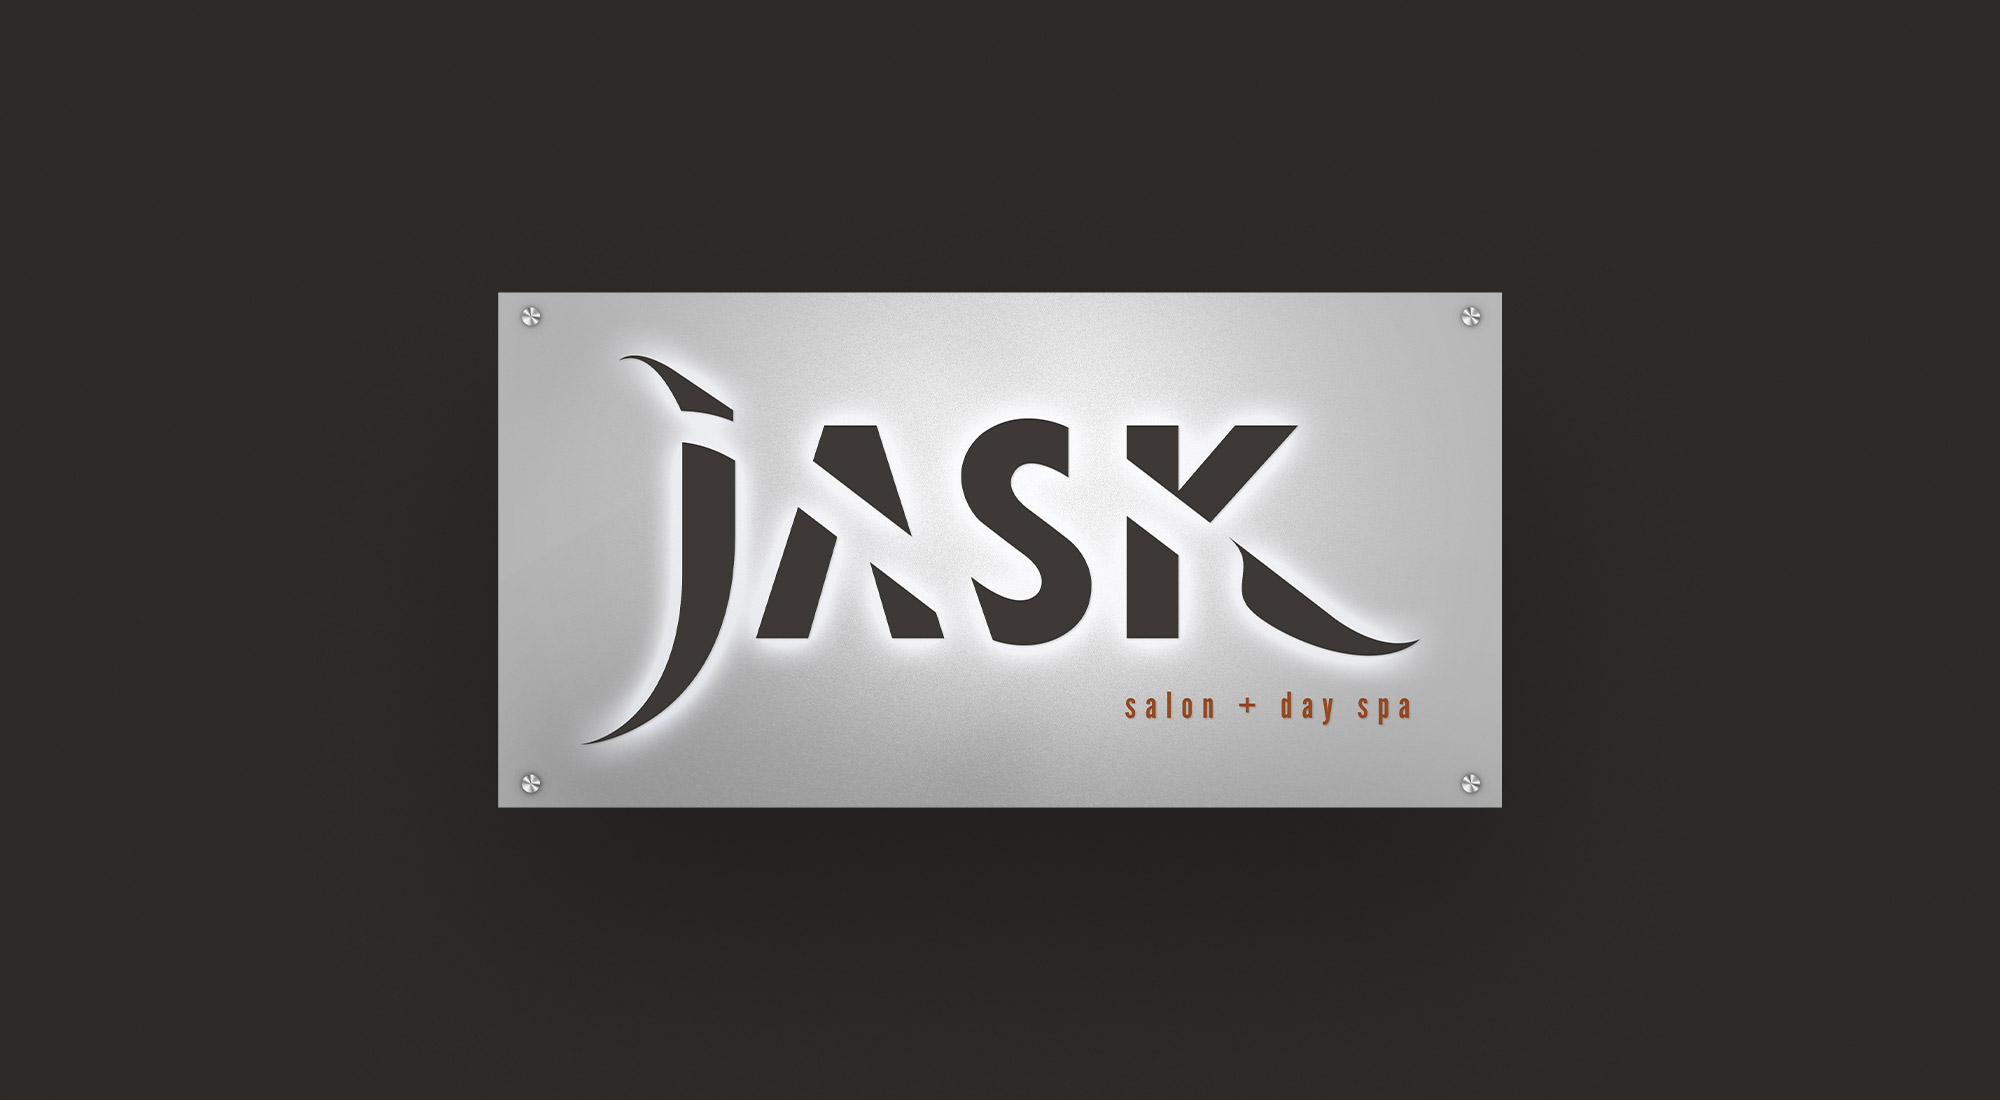 Jask Salon Signage